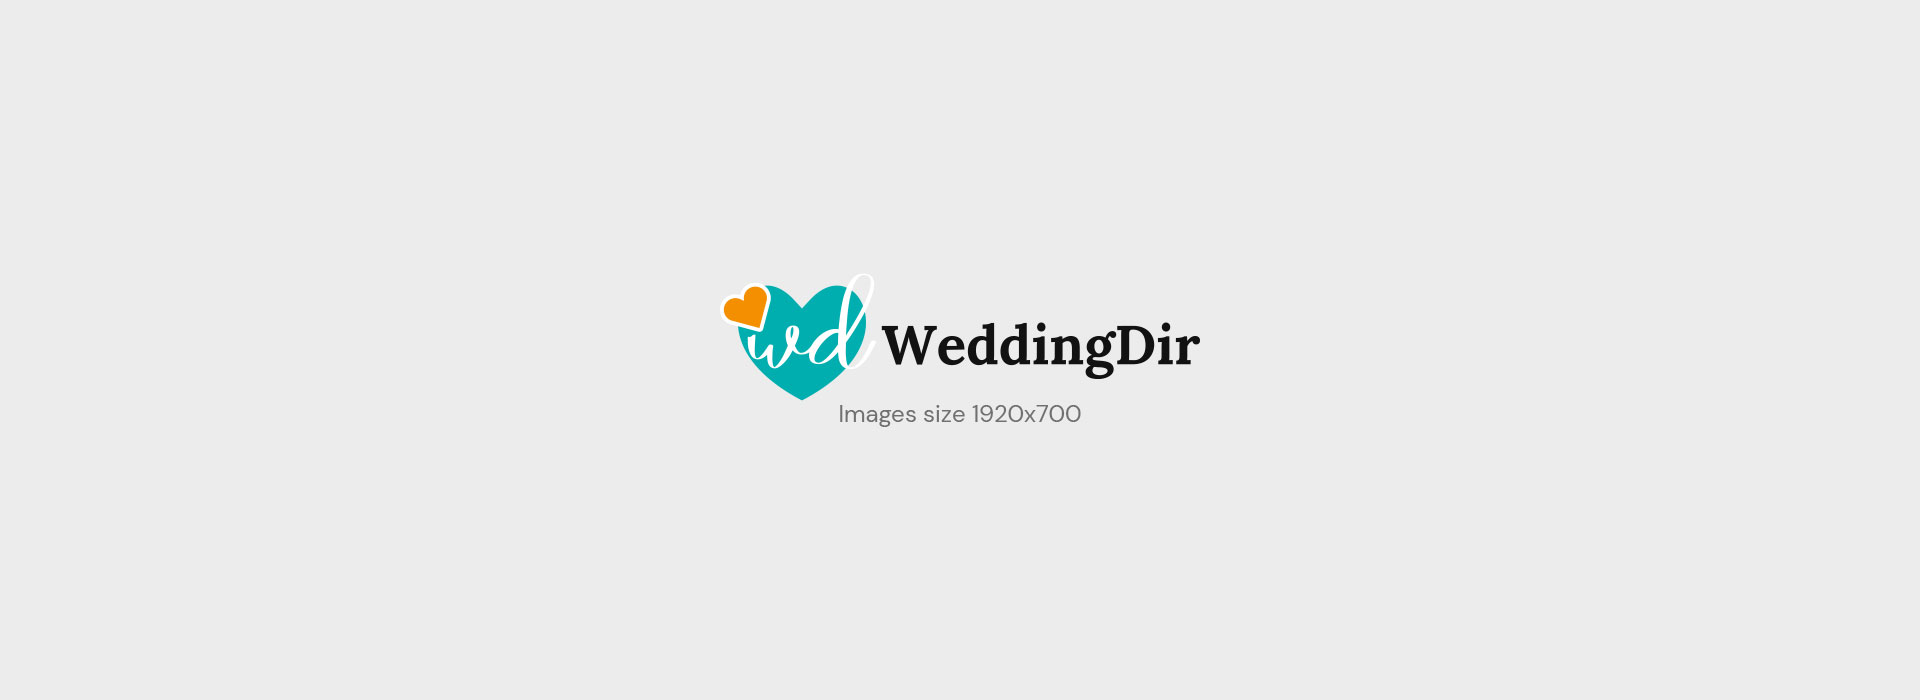 Photographer Category Vendor Wedding Photography weddingdir slider 4